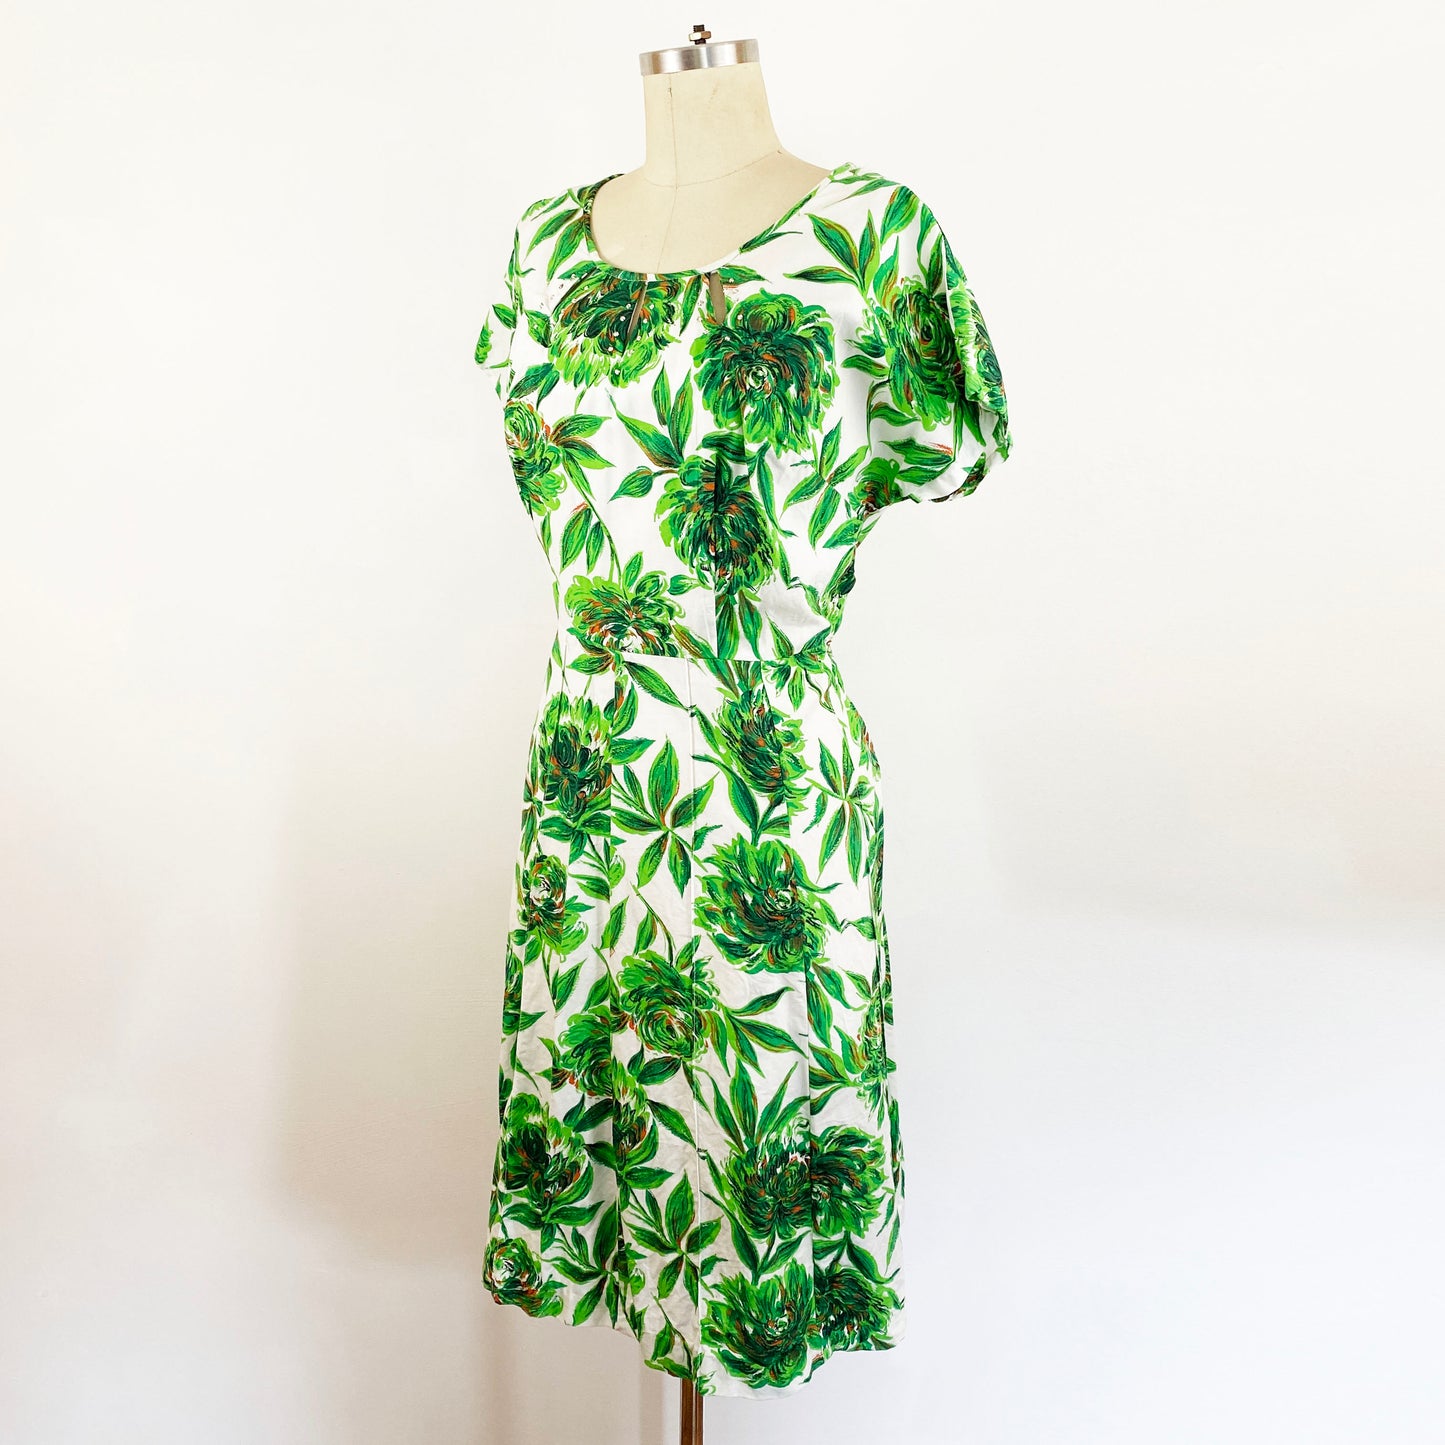 1950s Bold Green and White Floral Chrysanthemum Cotton A-line Dress Cut Out Neckline / Vintage Plus Size 0X 14/16